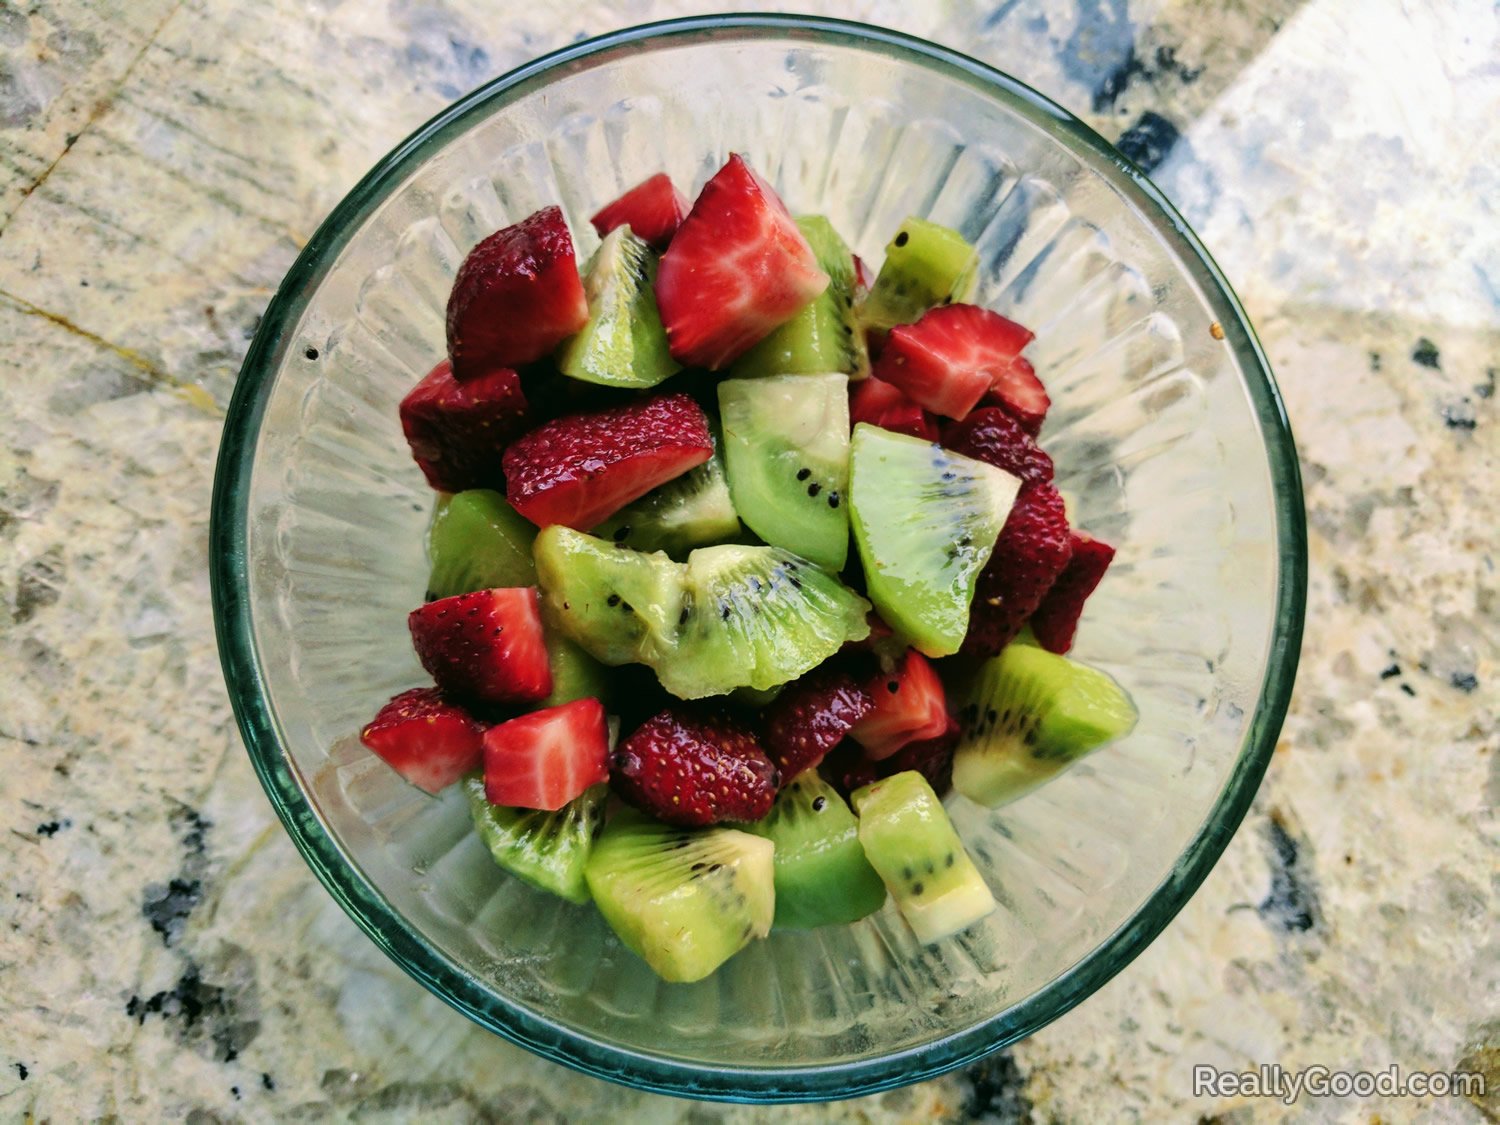 Strawberries and kiwifruit